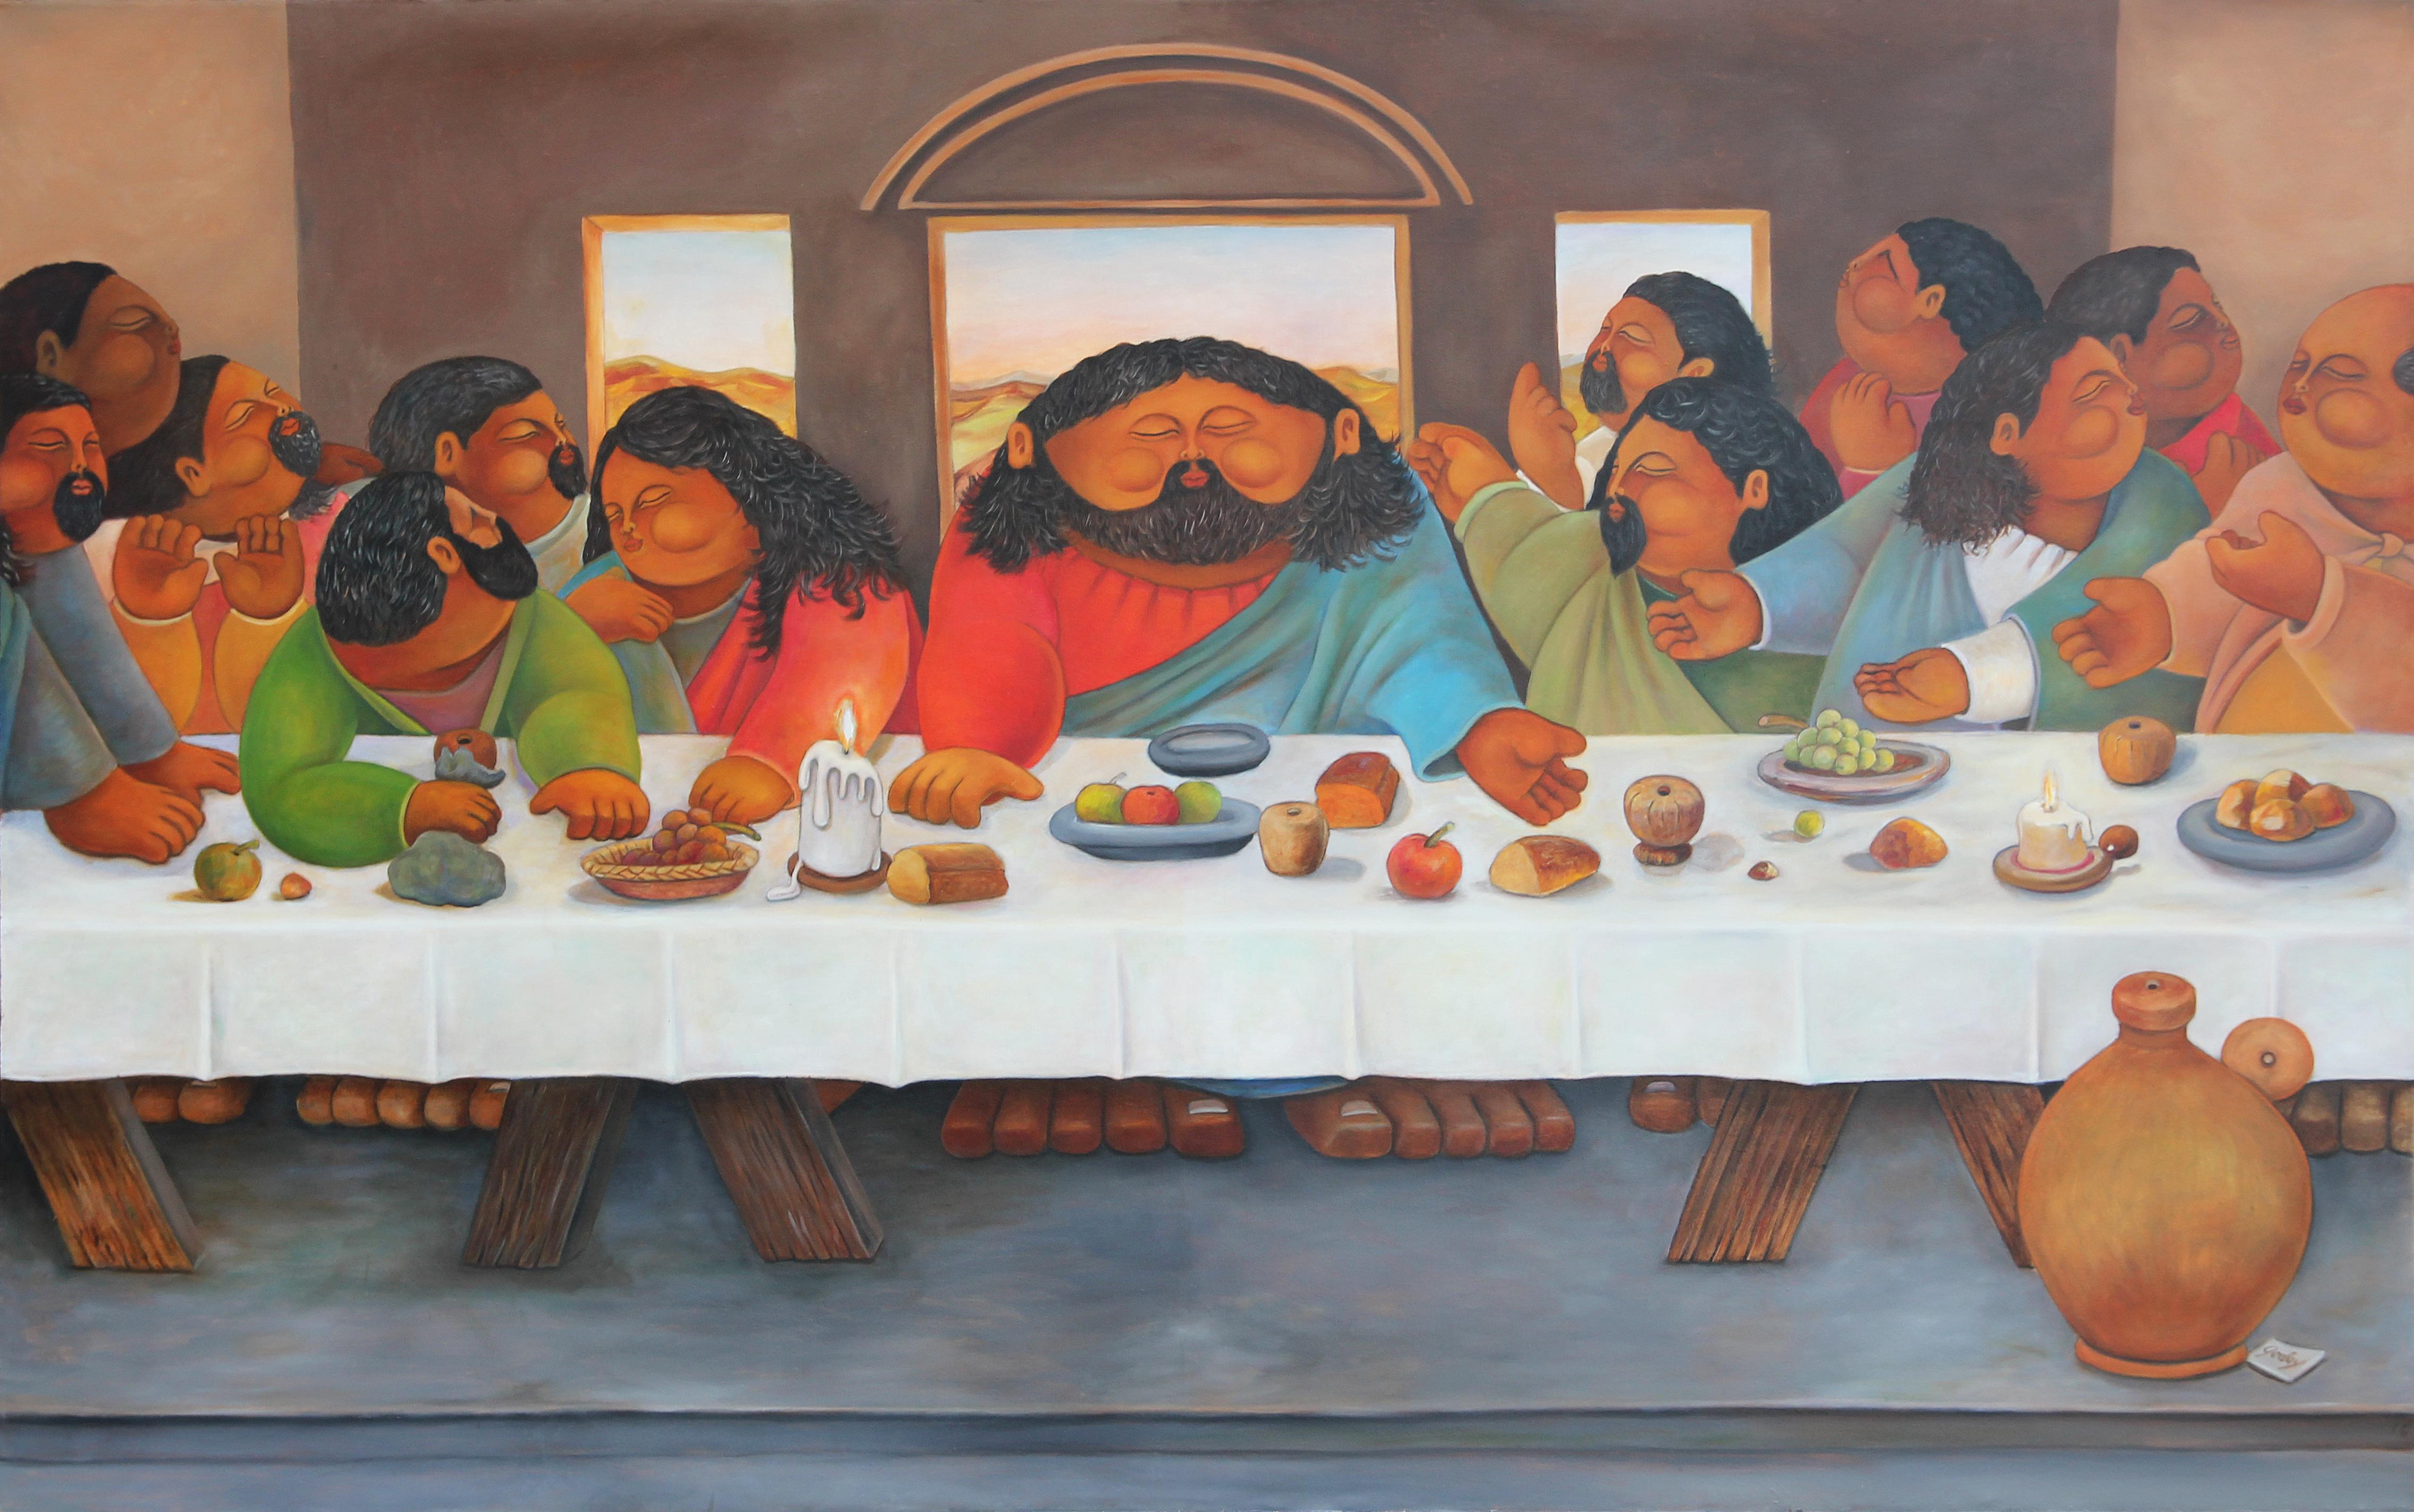 Alberto Godoy Portrait Painting - Modern Tribute to Leonardo da Vinci's "The Last Supper"